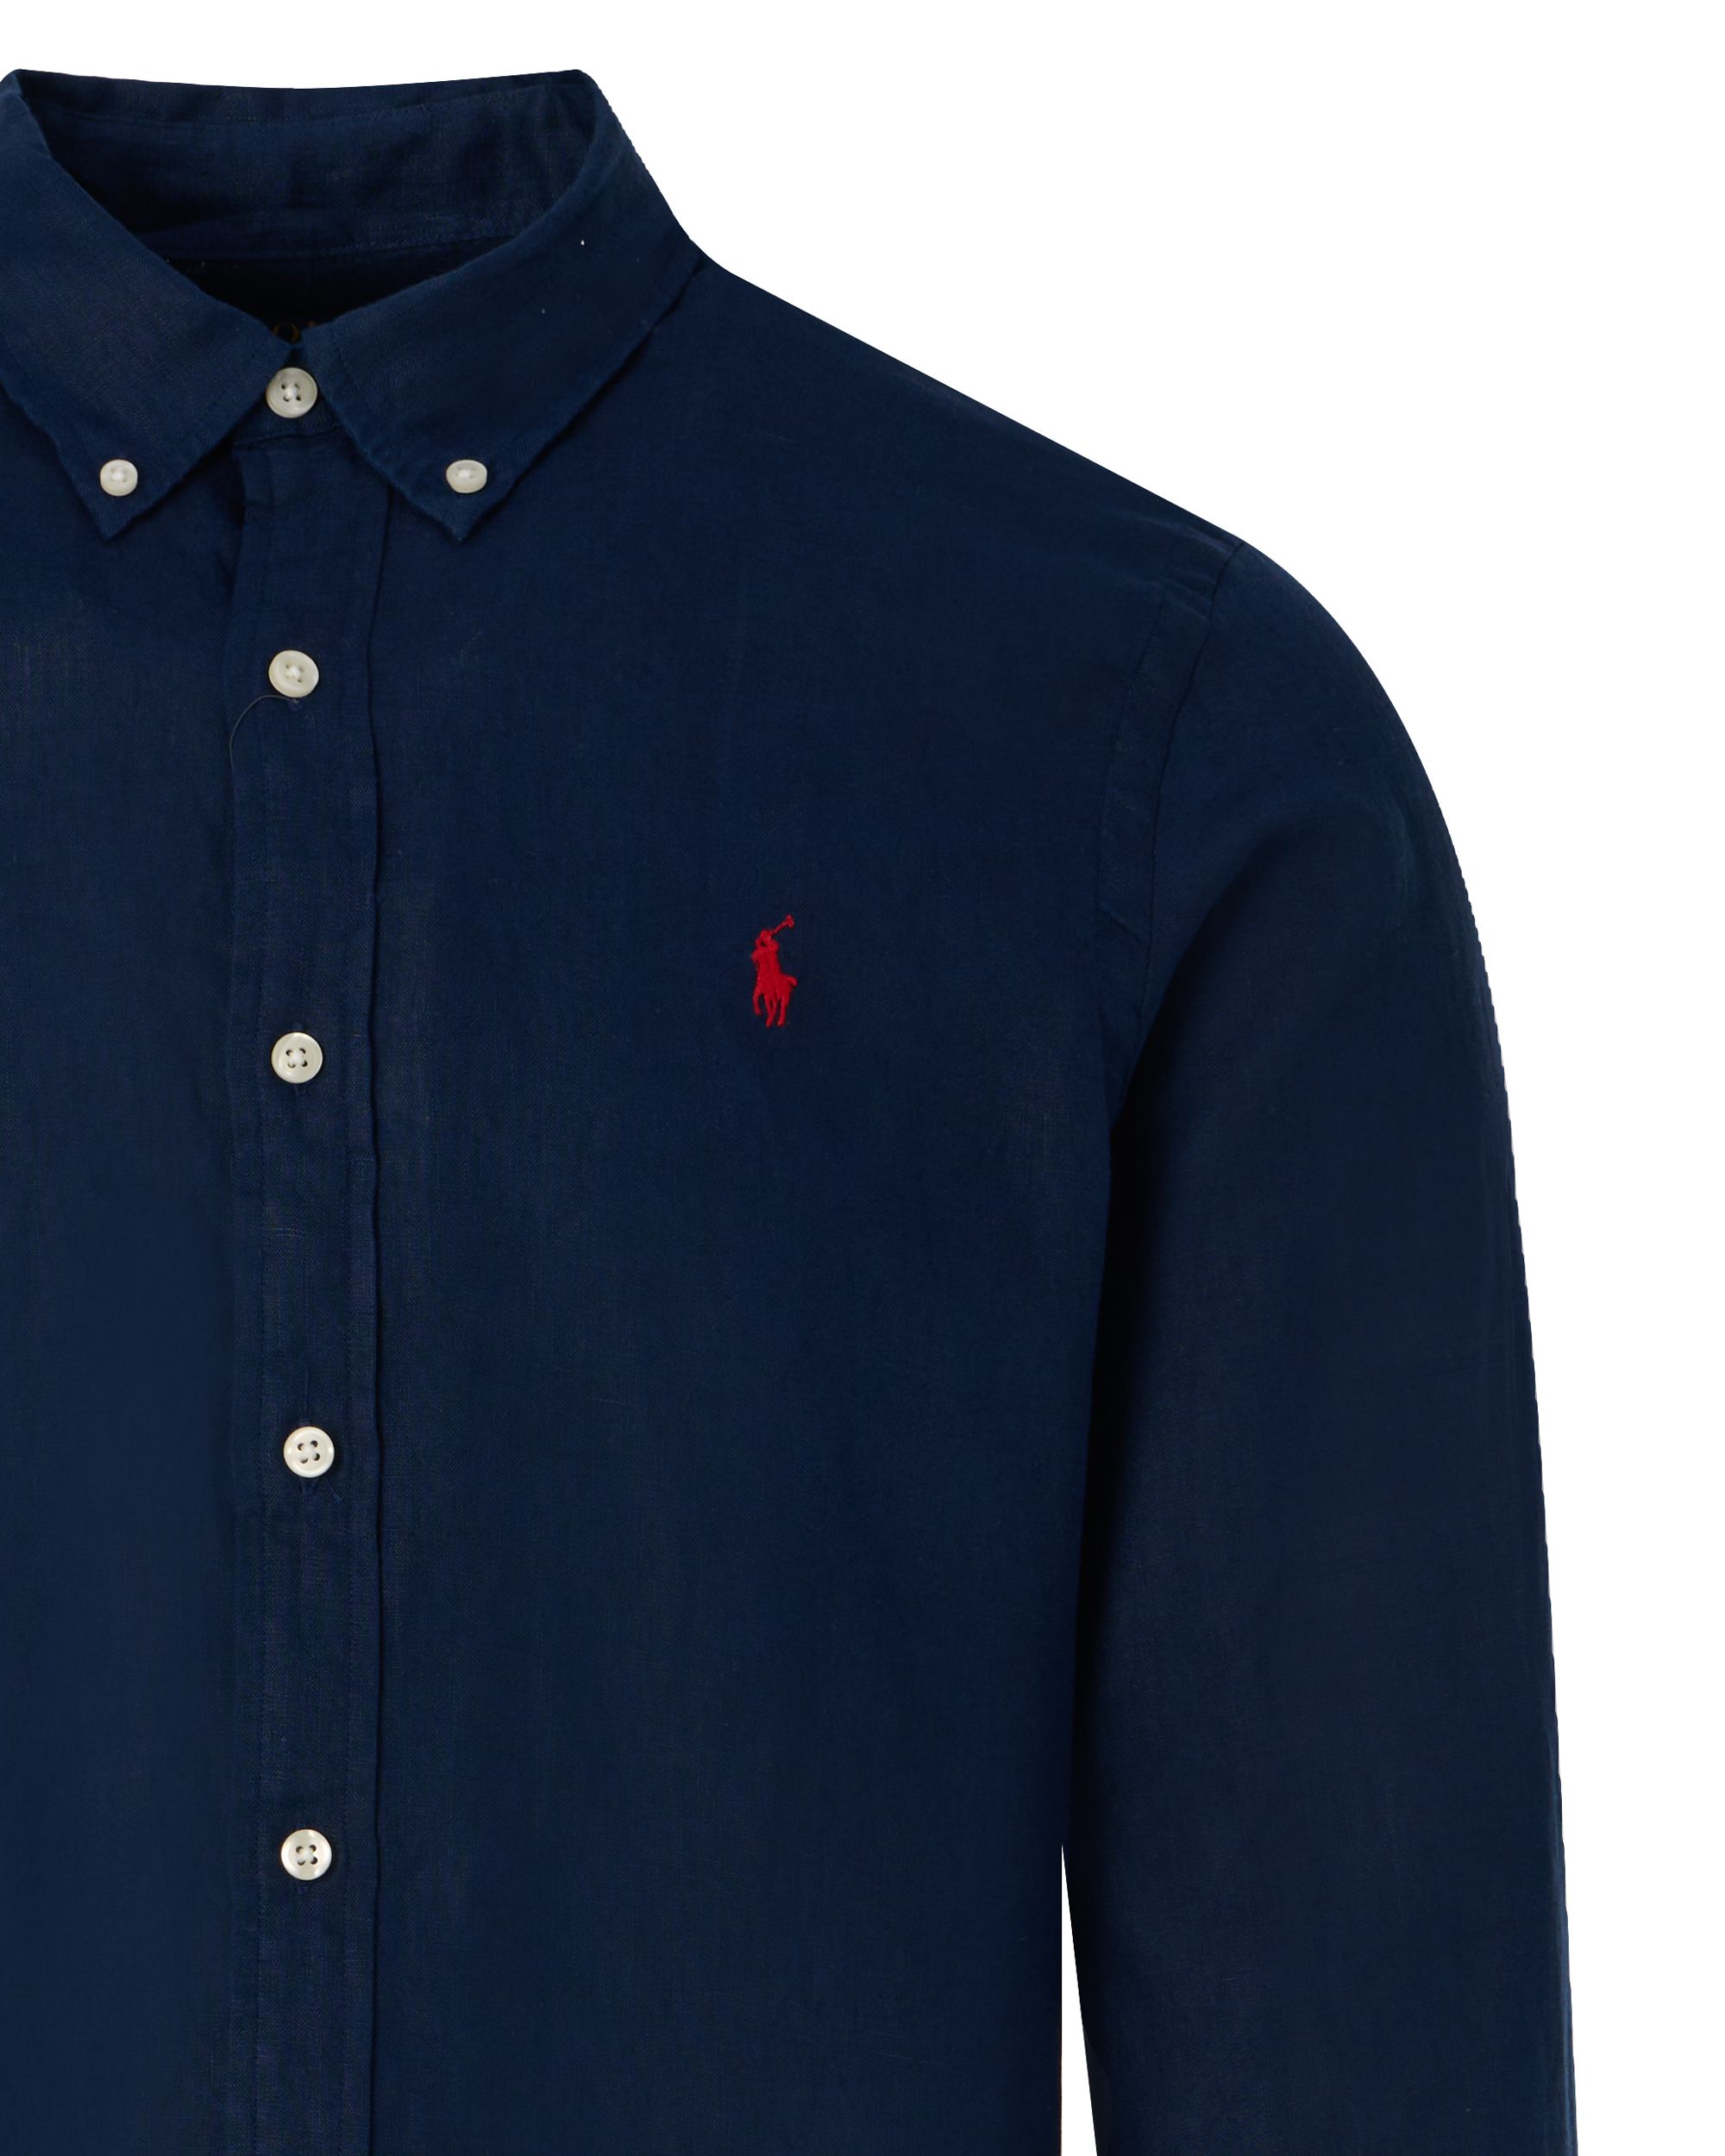 Polo Ralph Lauren Casual Overhemd LM Donker blauw 083462-001-L